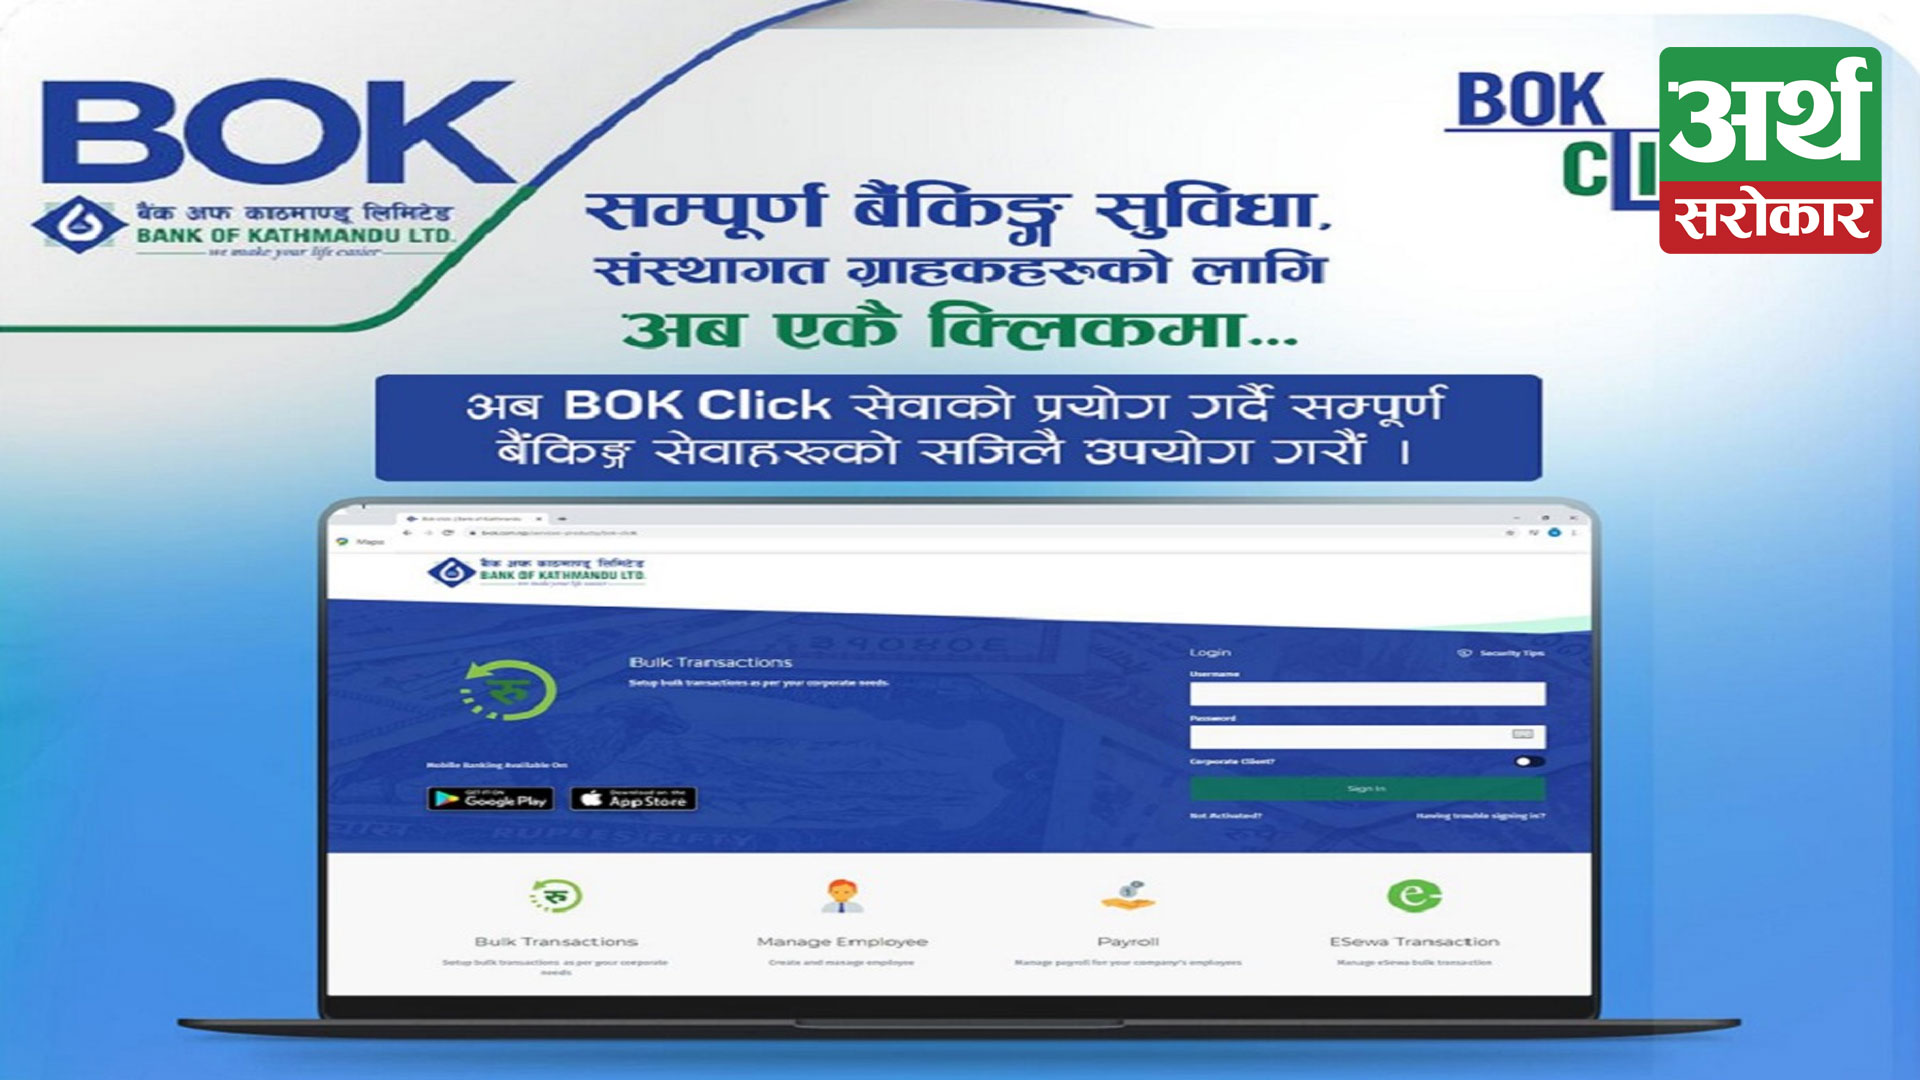 बैंक अफ काठमाण्डूले ल्यायाे परिमार्जित ईन्टरनेट बैंकिङ्ग सेवा 'बिओके क्लिक'